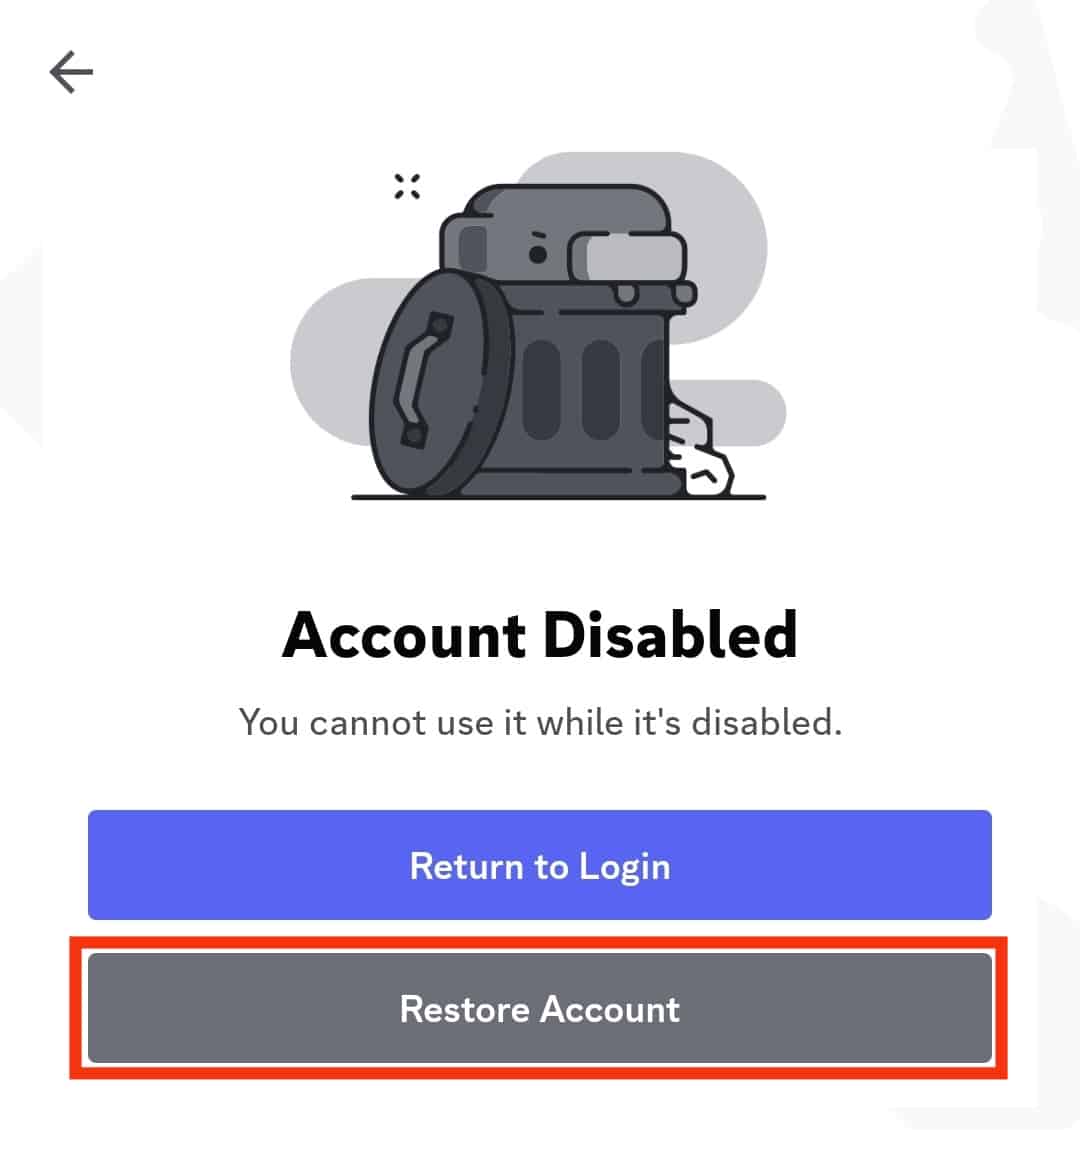 Tap The “Restore Account” Button